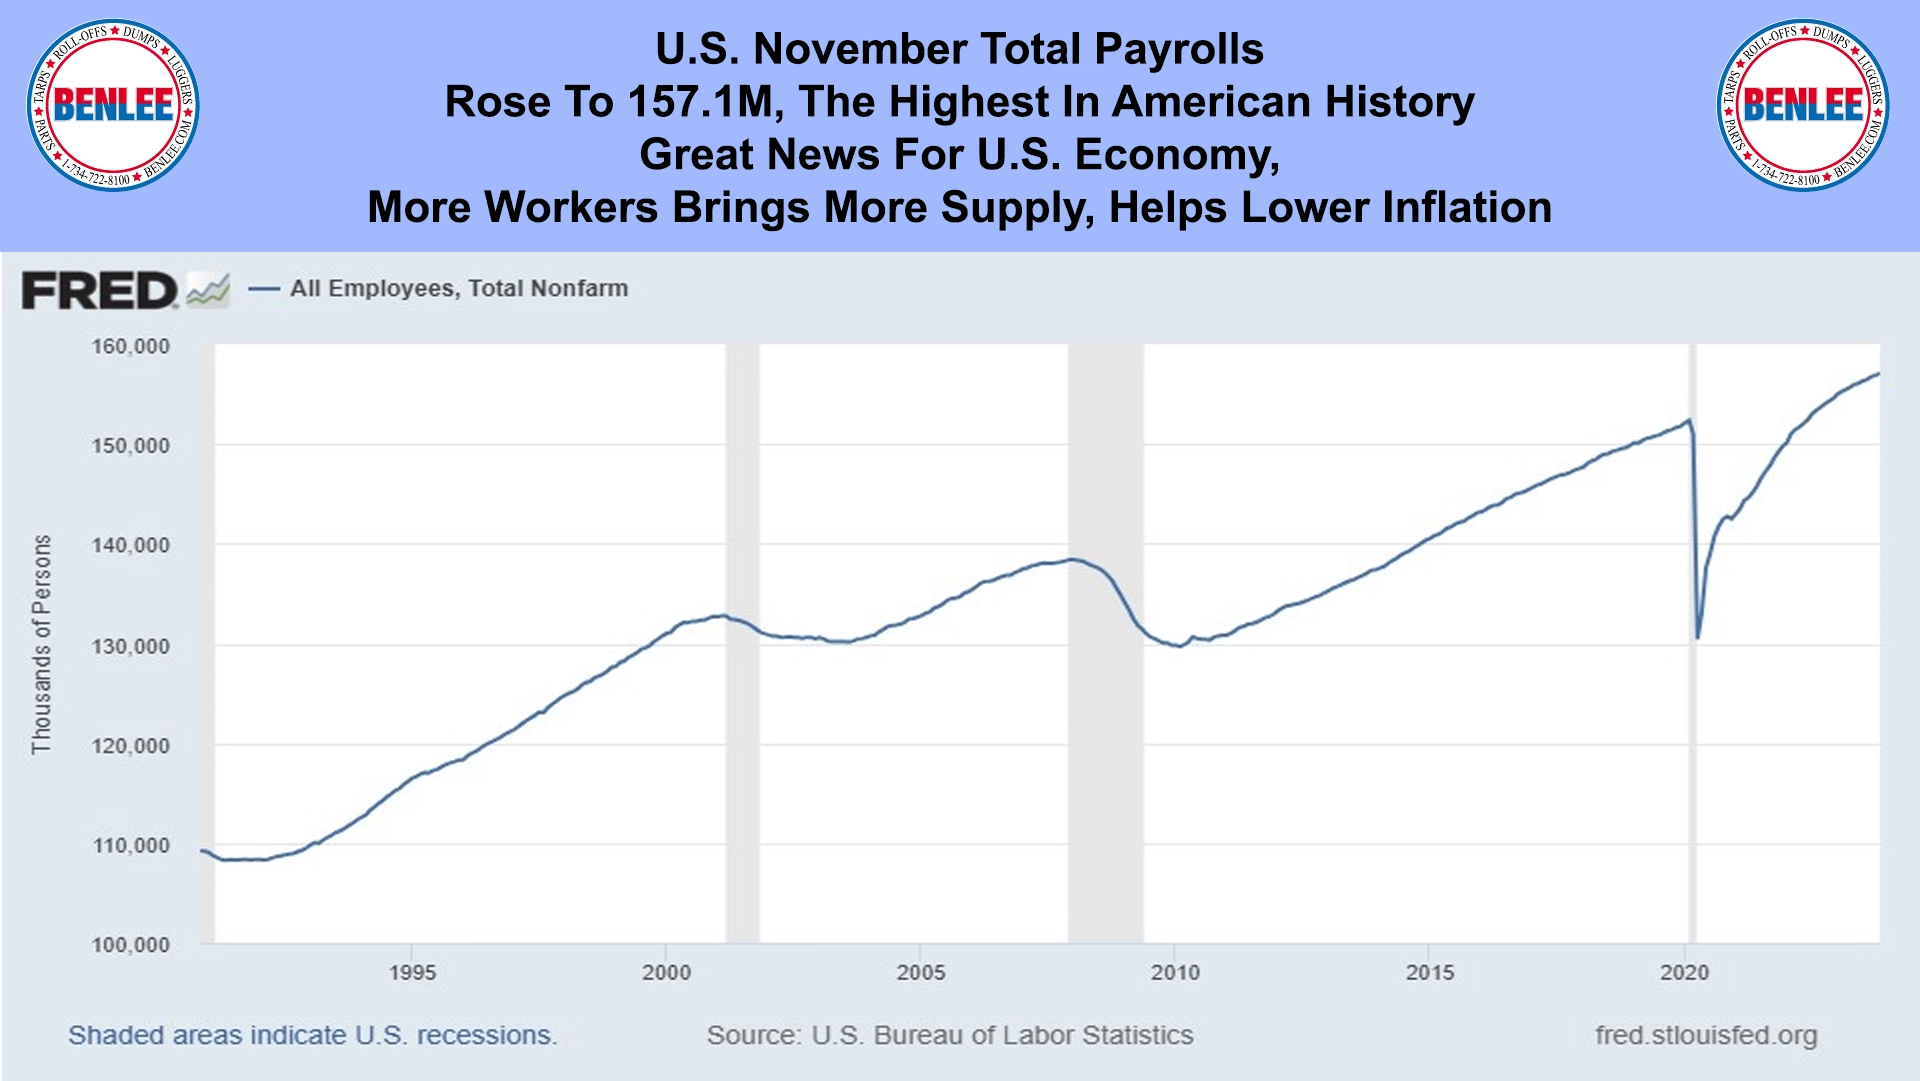 U.S. November Total Payrolls